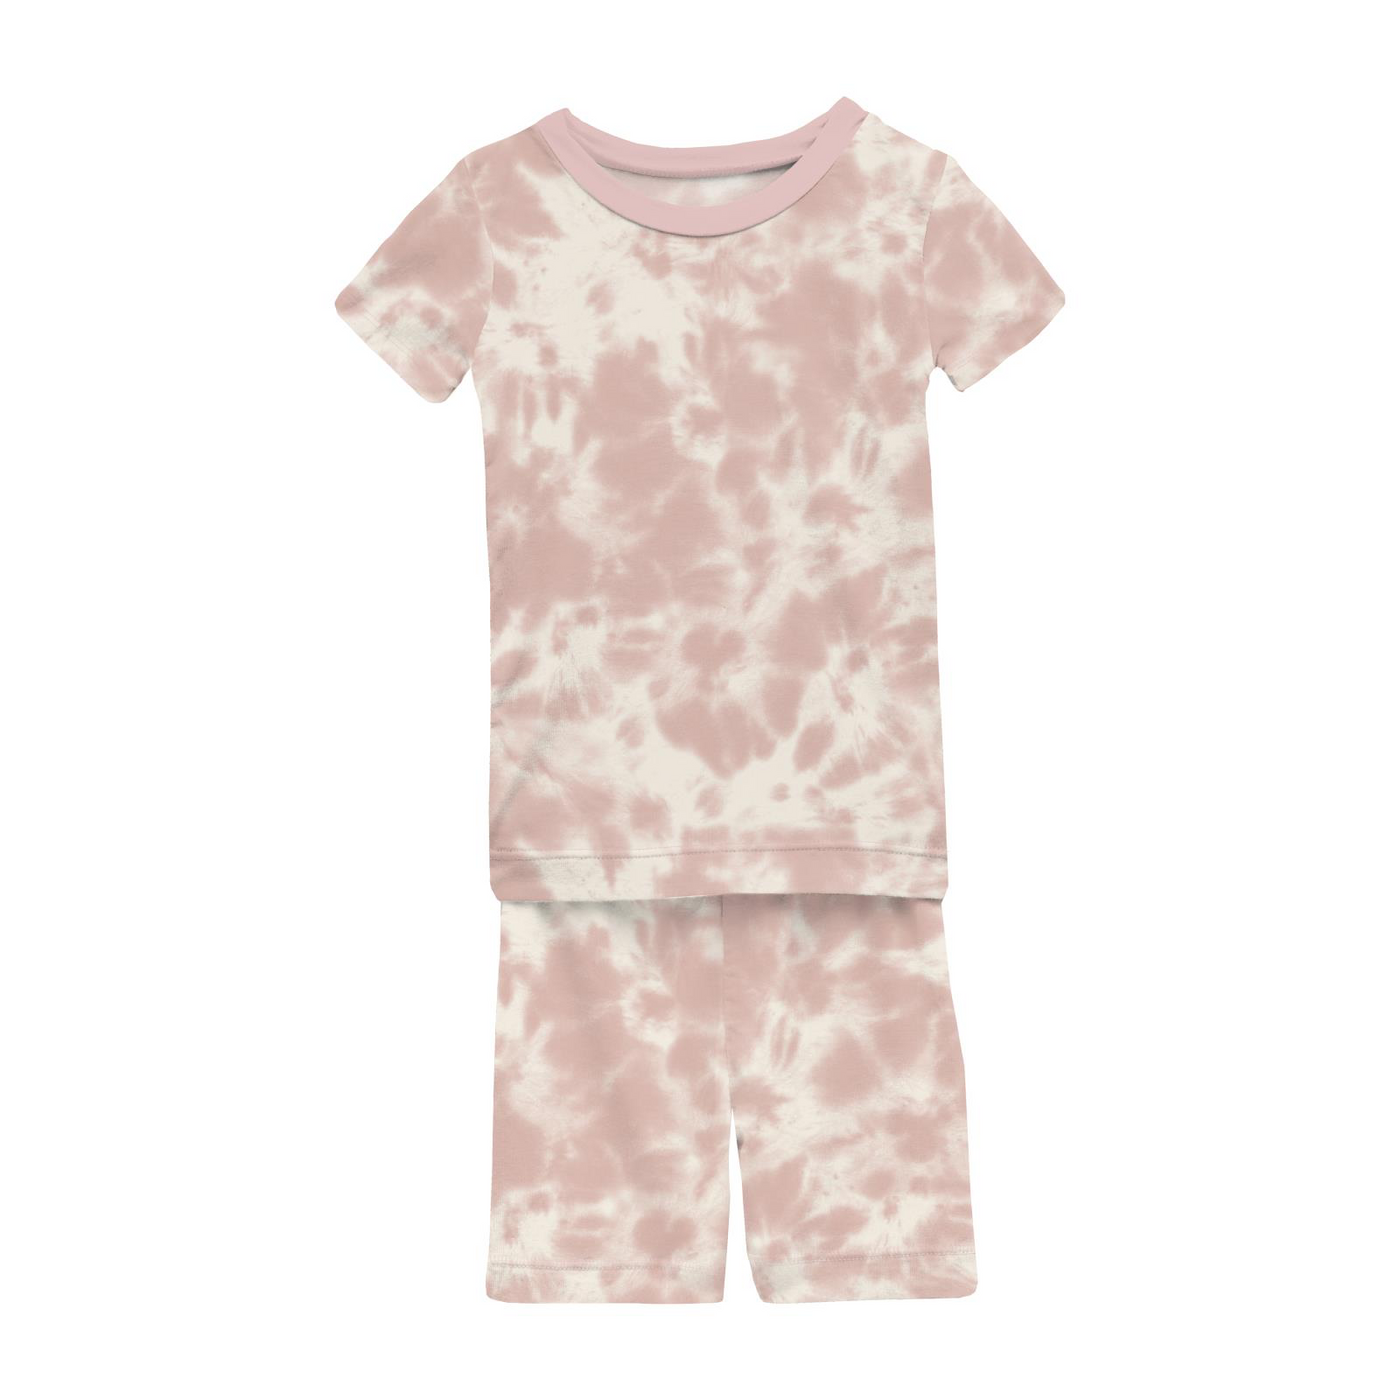 Kickee Pants Pajama Set with Shorts: Baby Rose Tie Dye